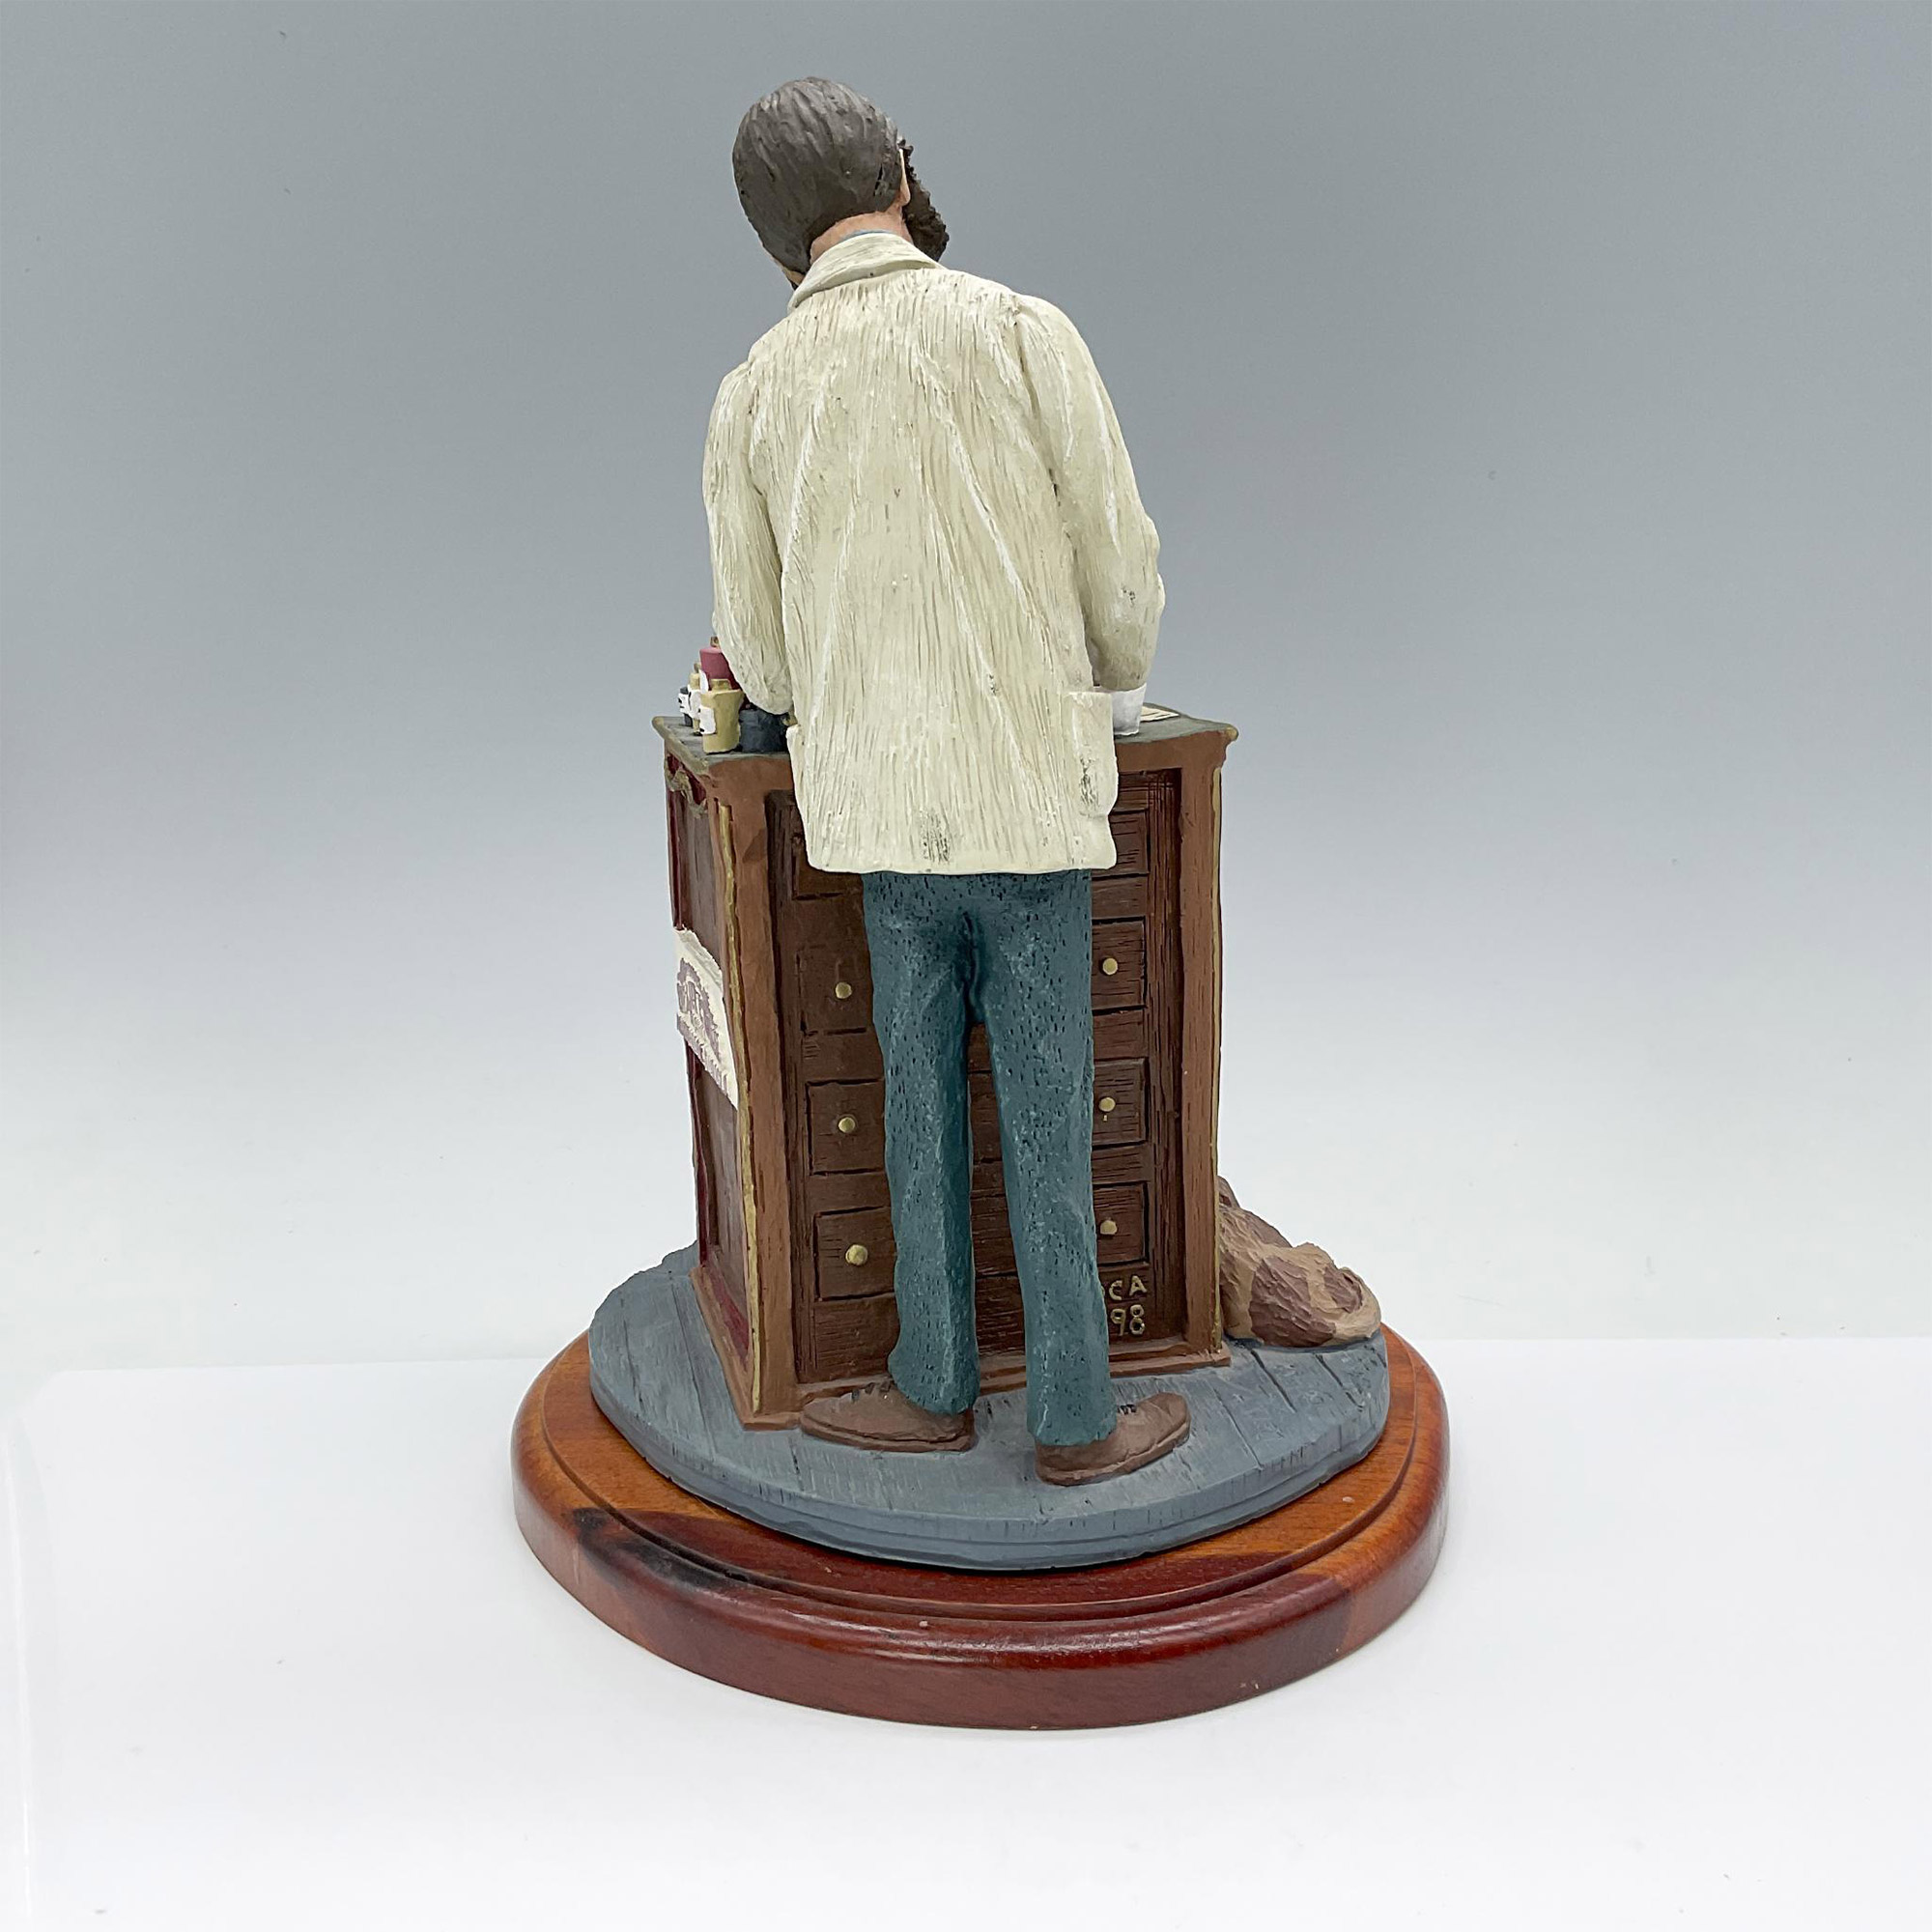 Demott Heritage Collection Figurine, Pharmacist - Image 2 of 3